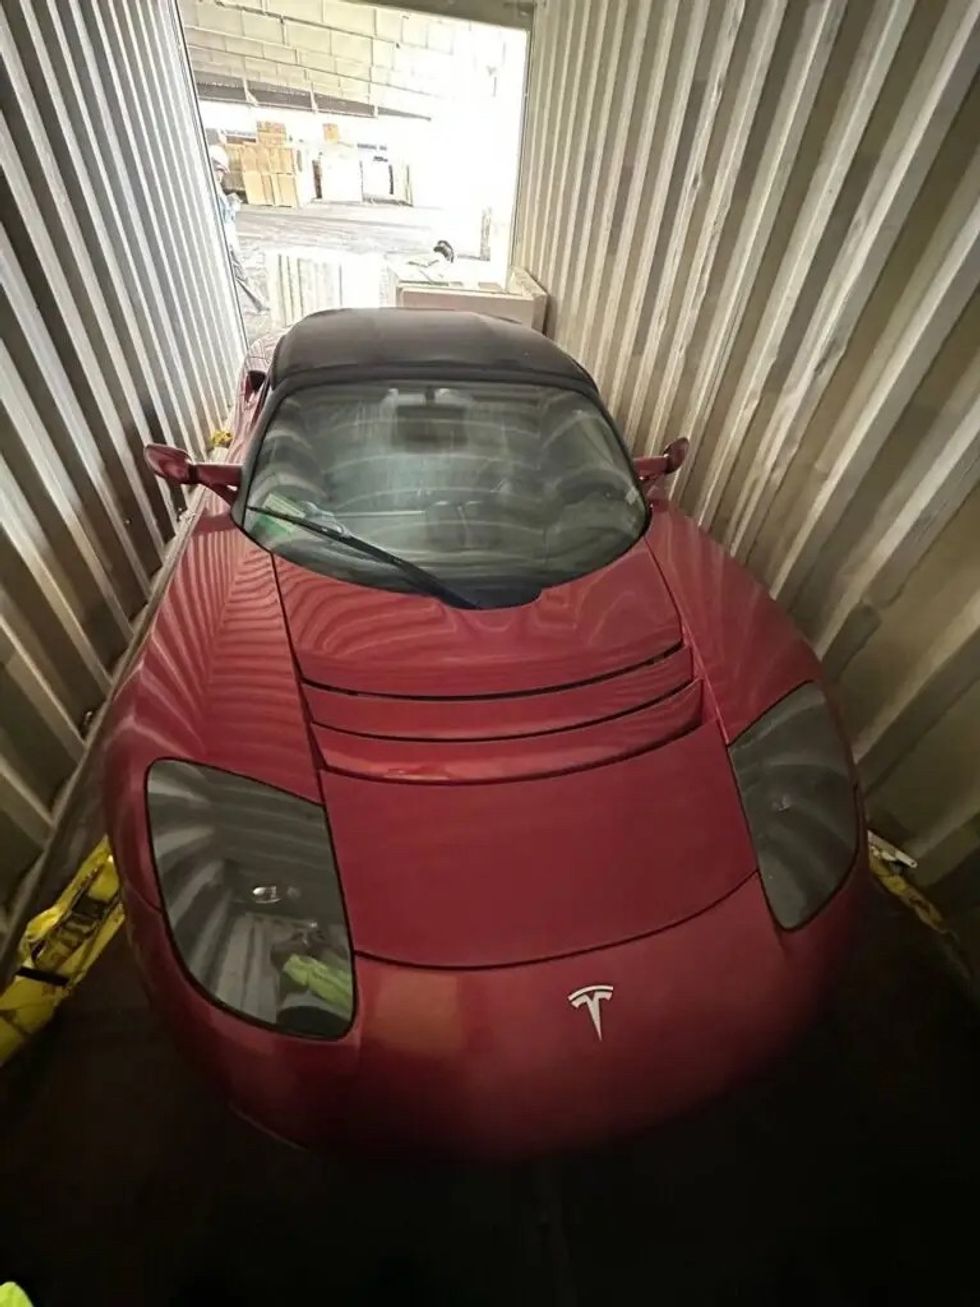 Dan O'Dowd recently purchased three long-forgotten Tesla Roadsters from China \u200b